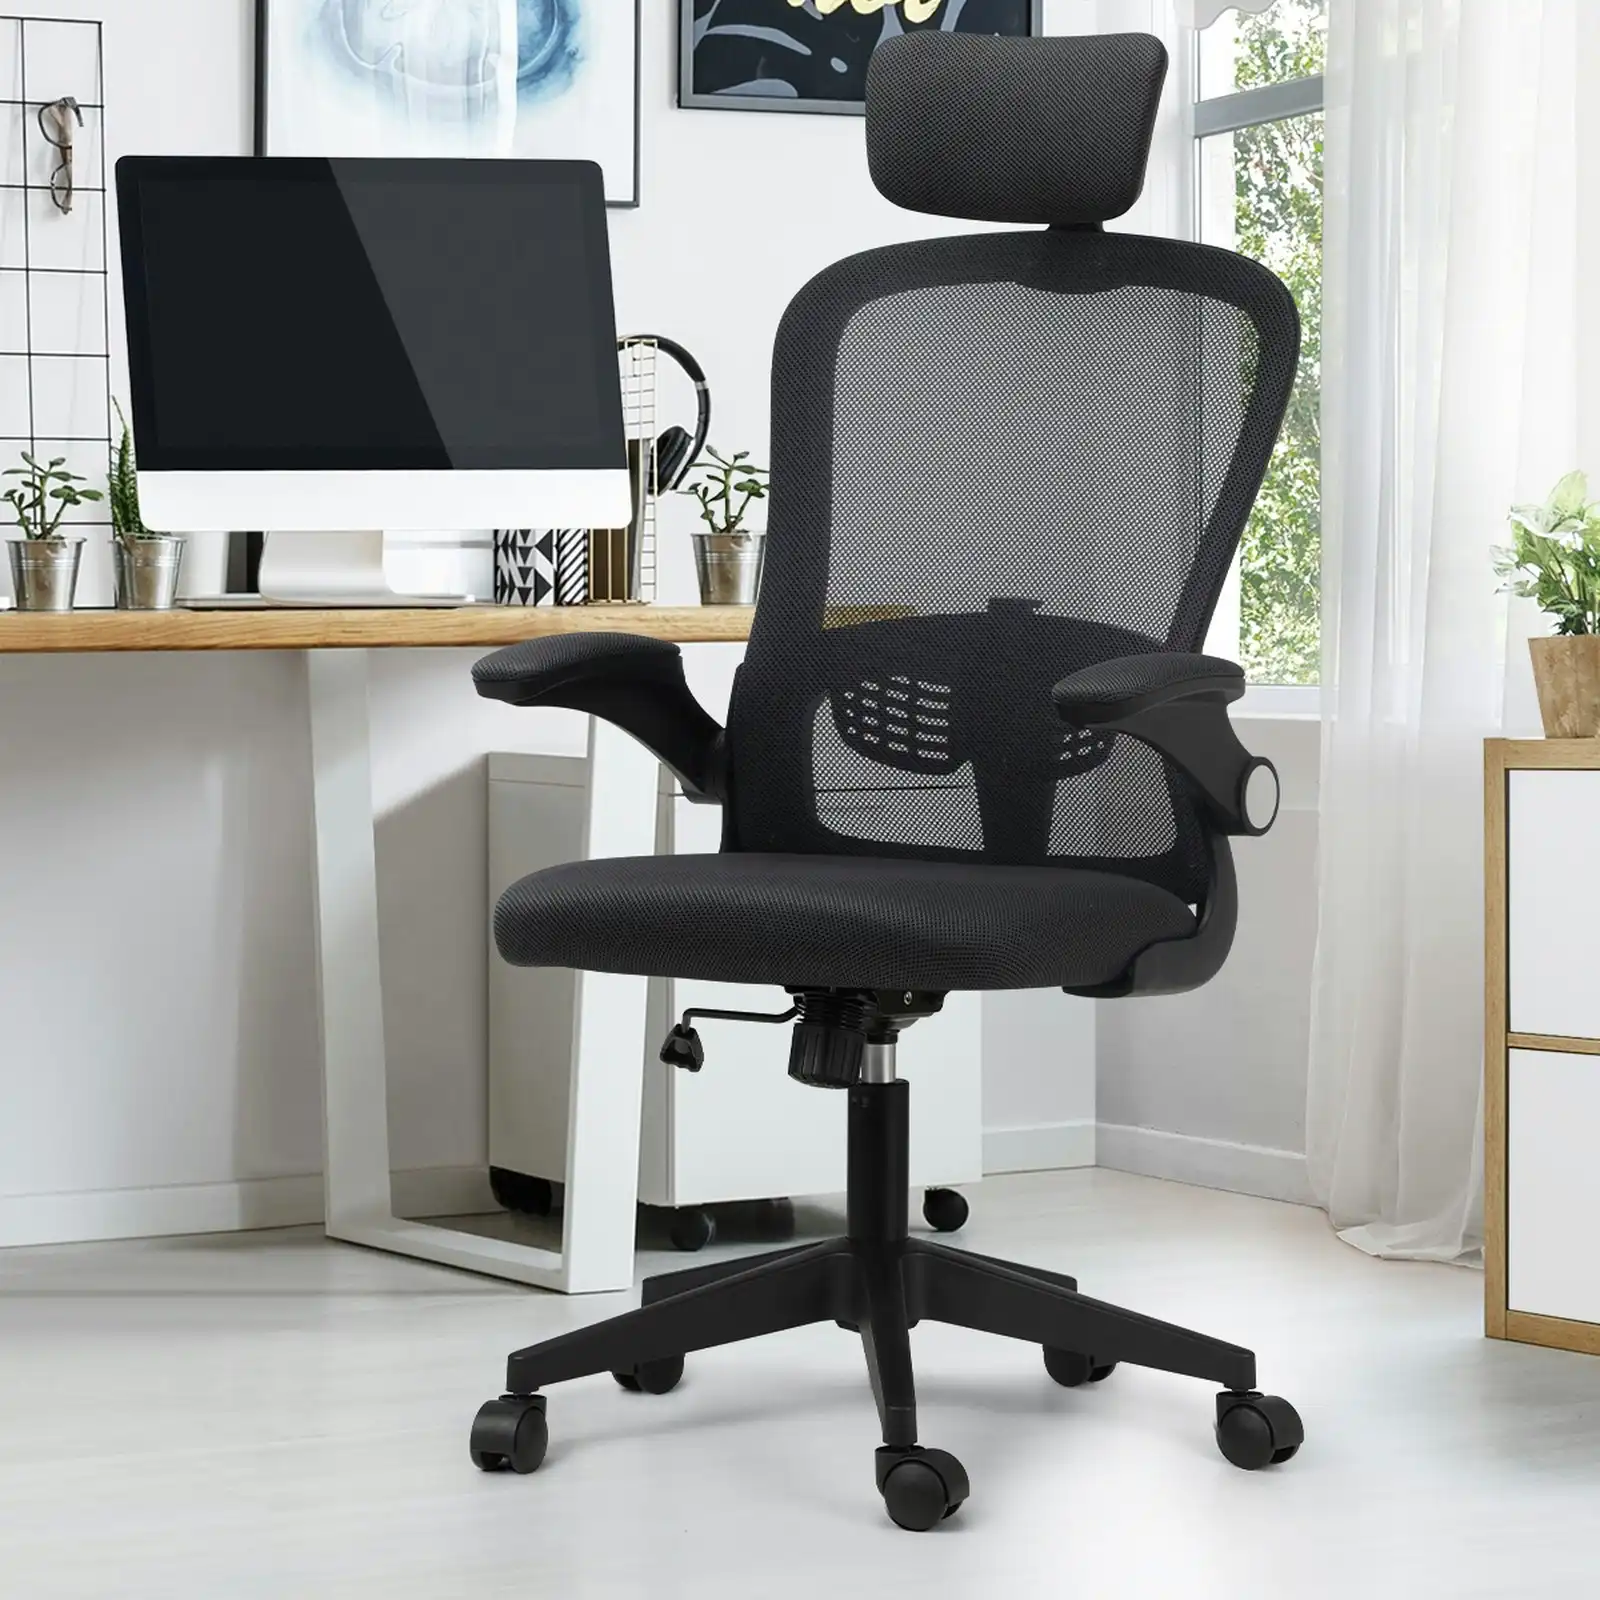 Oikiture Mesh Office Chair Executive Gaming Seat Racing Tilt Computer DARK GREY&BLACK